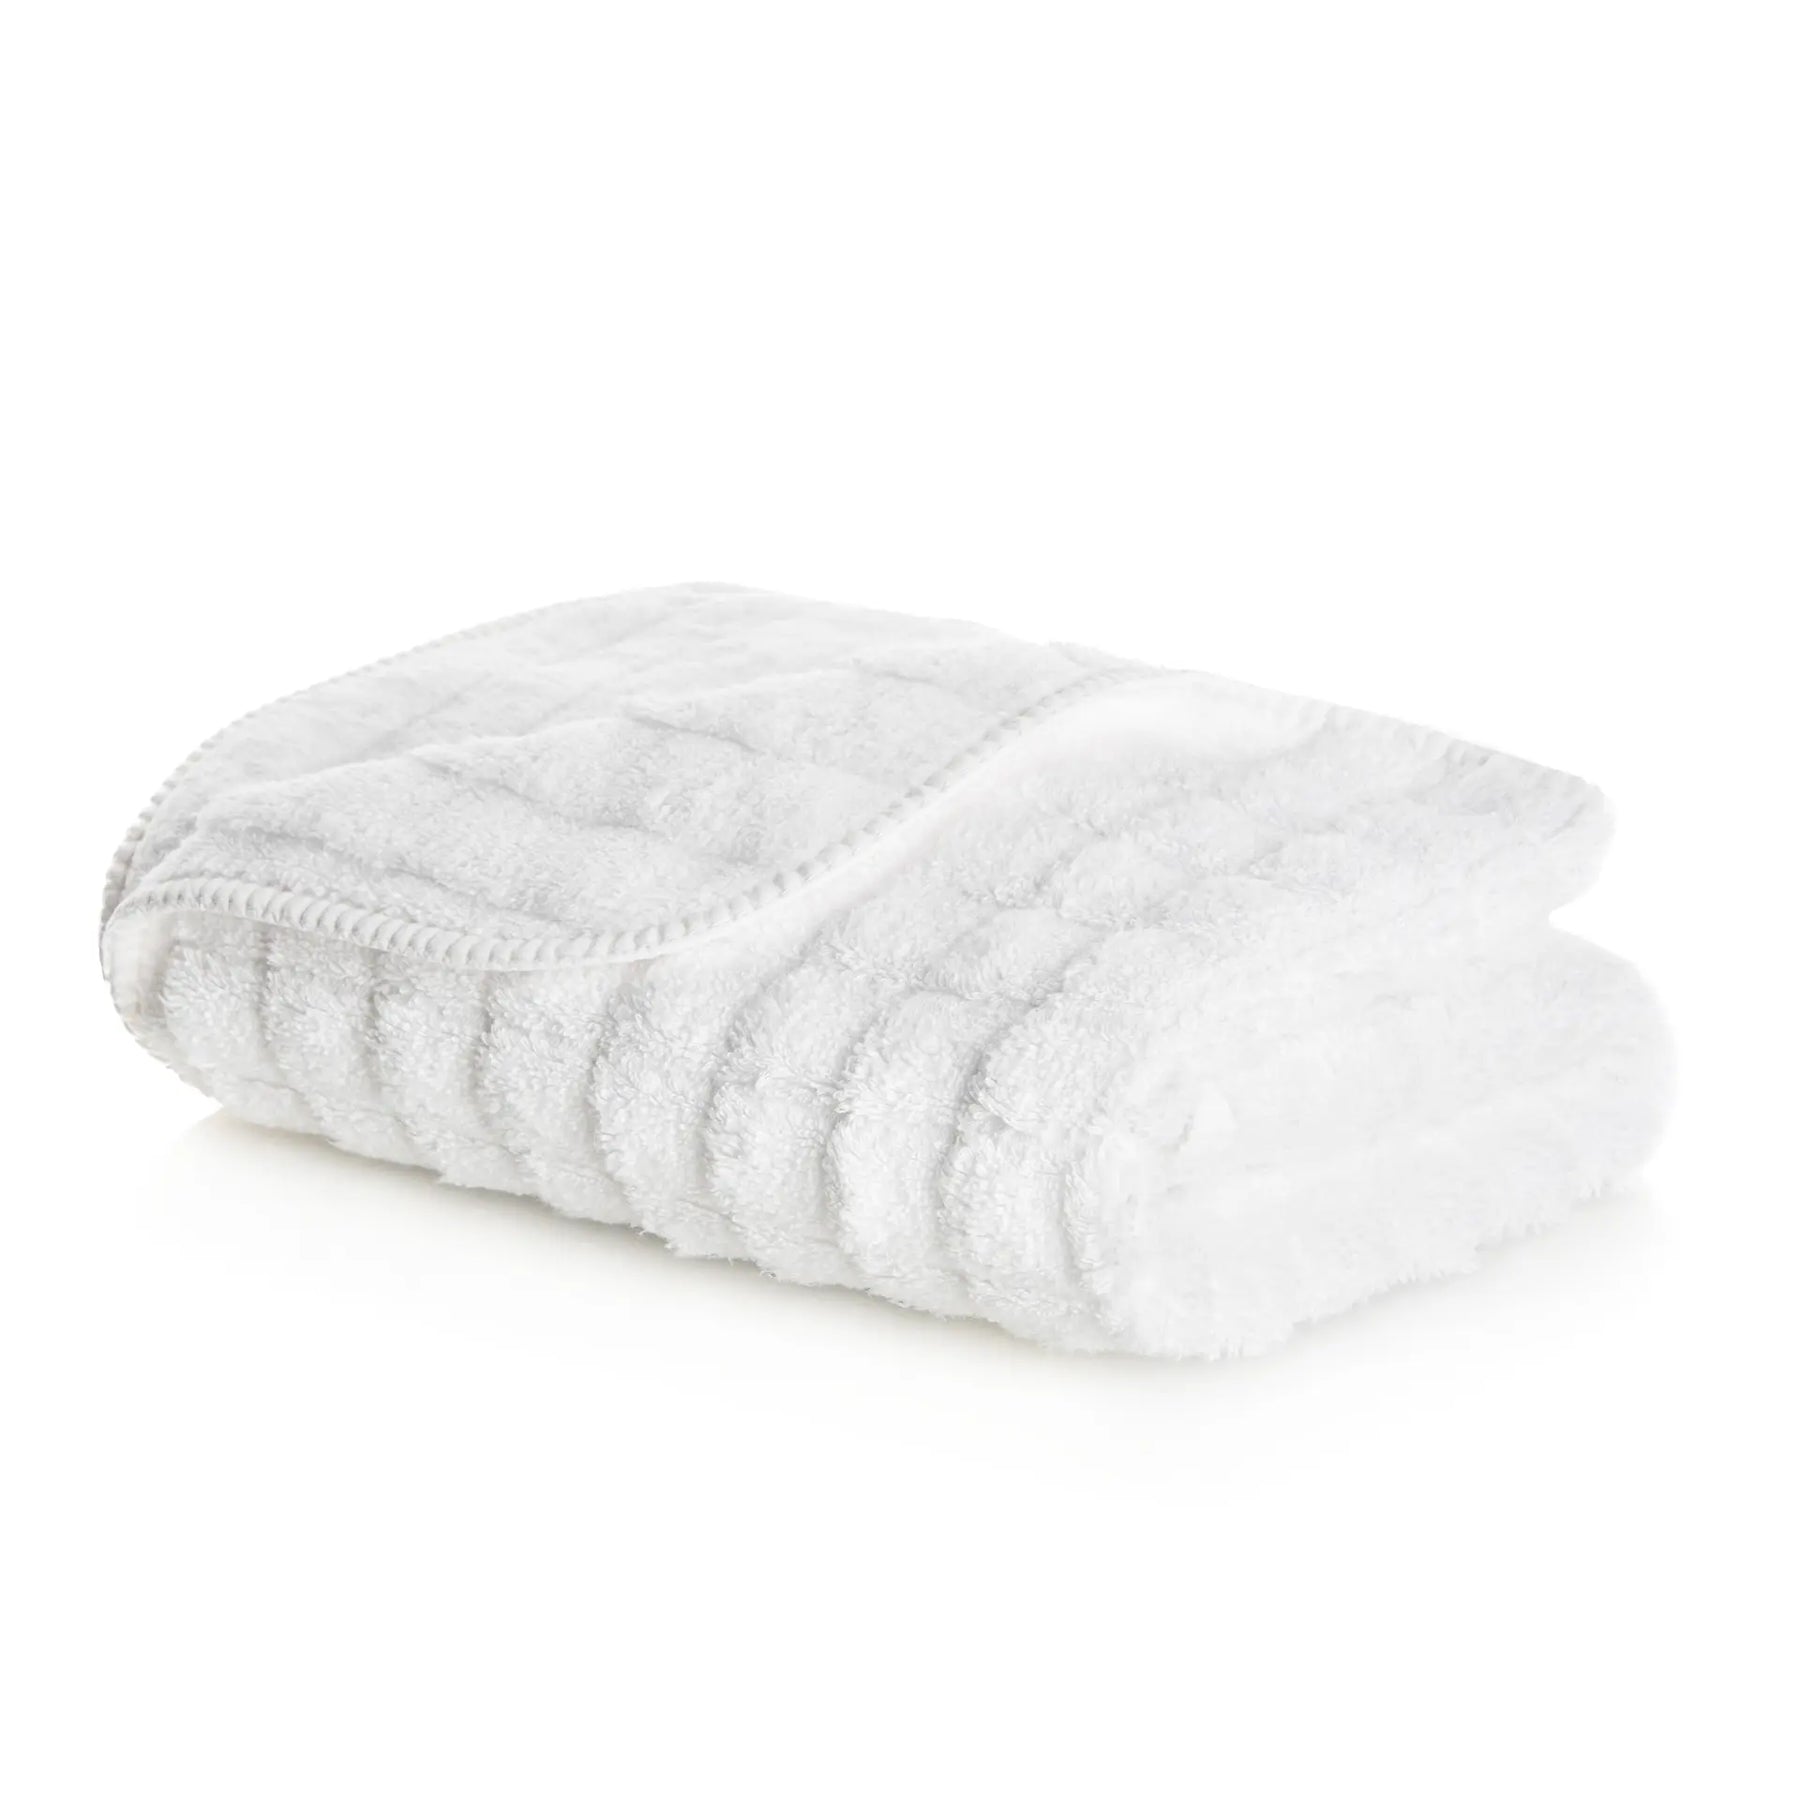  Graccioza Heaven Towels  White